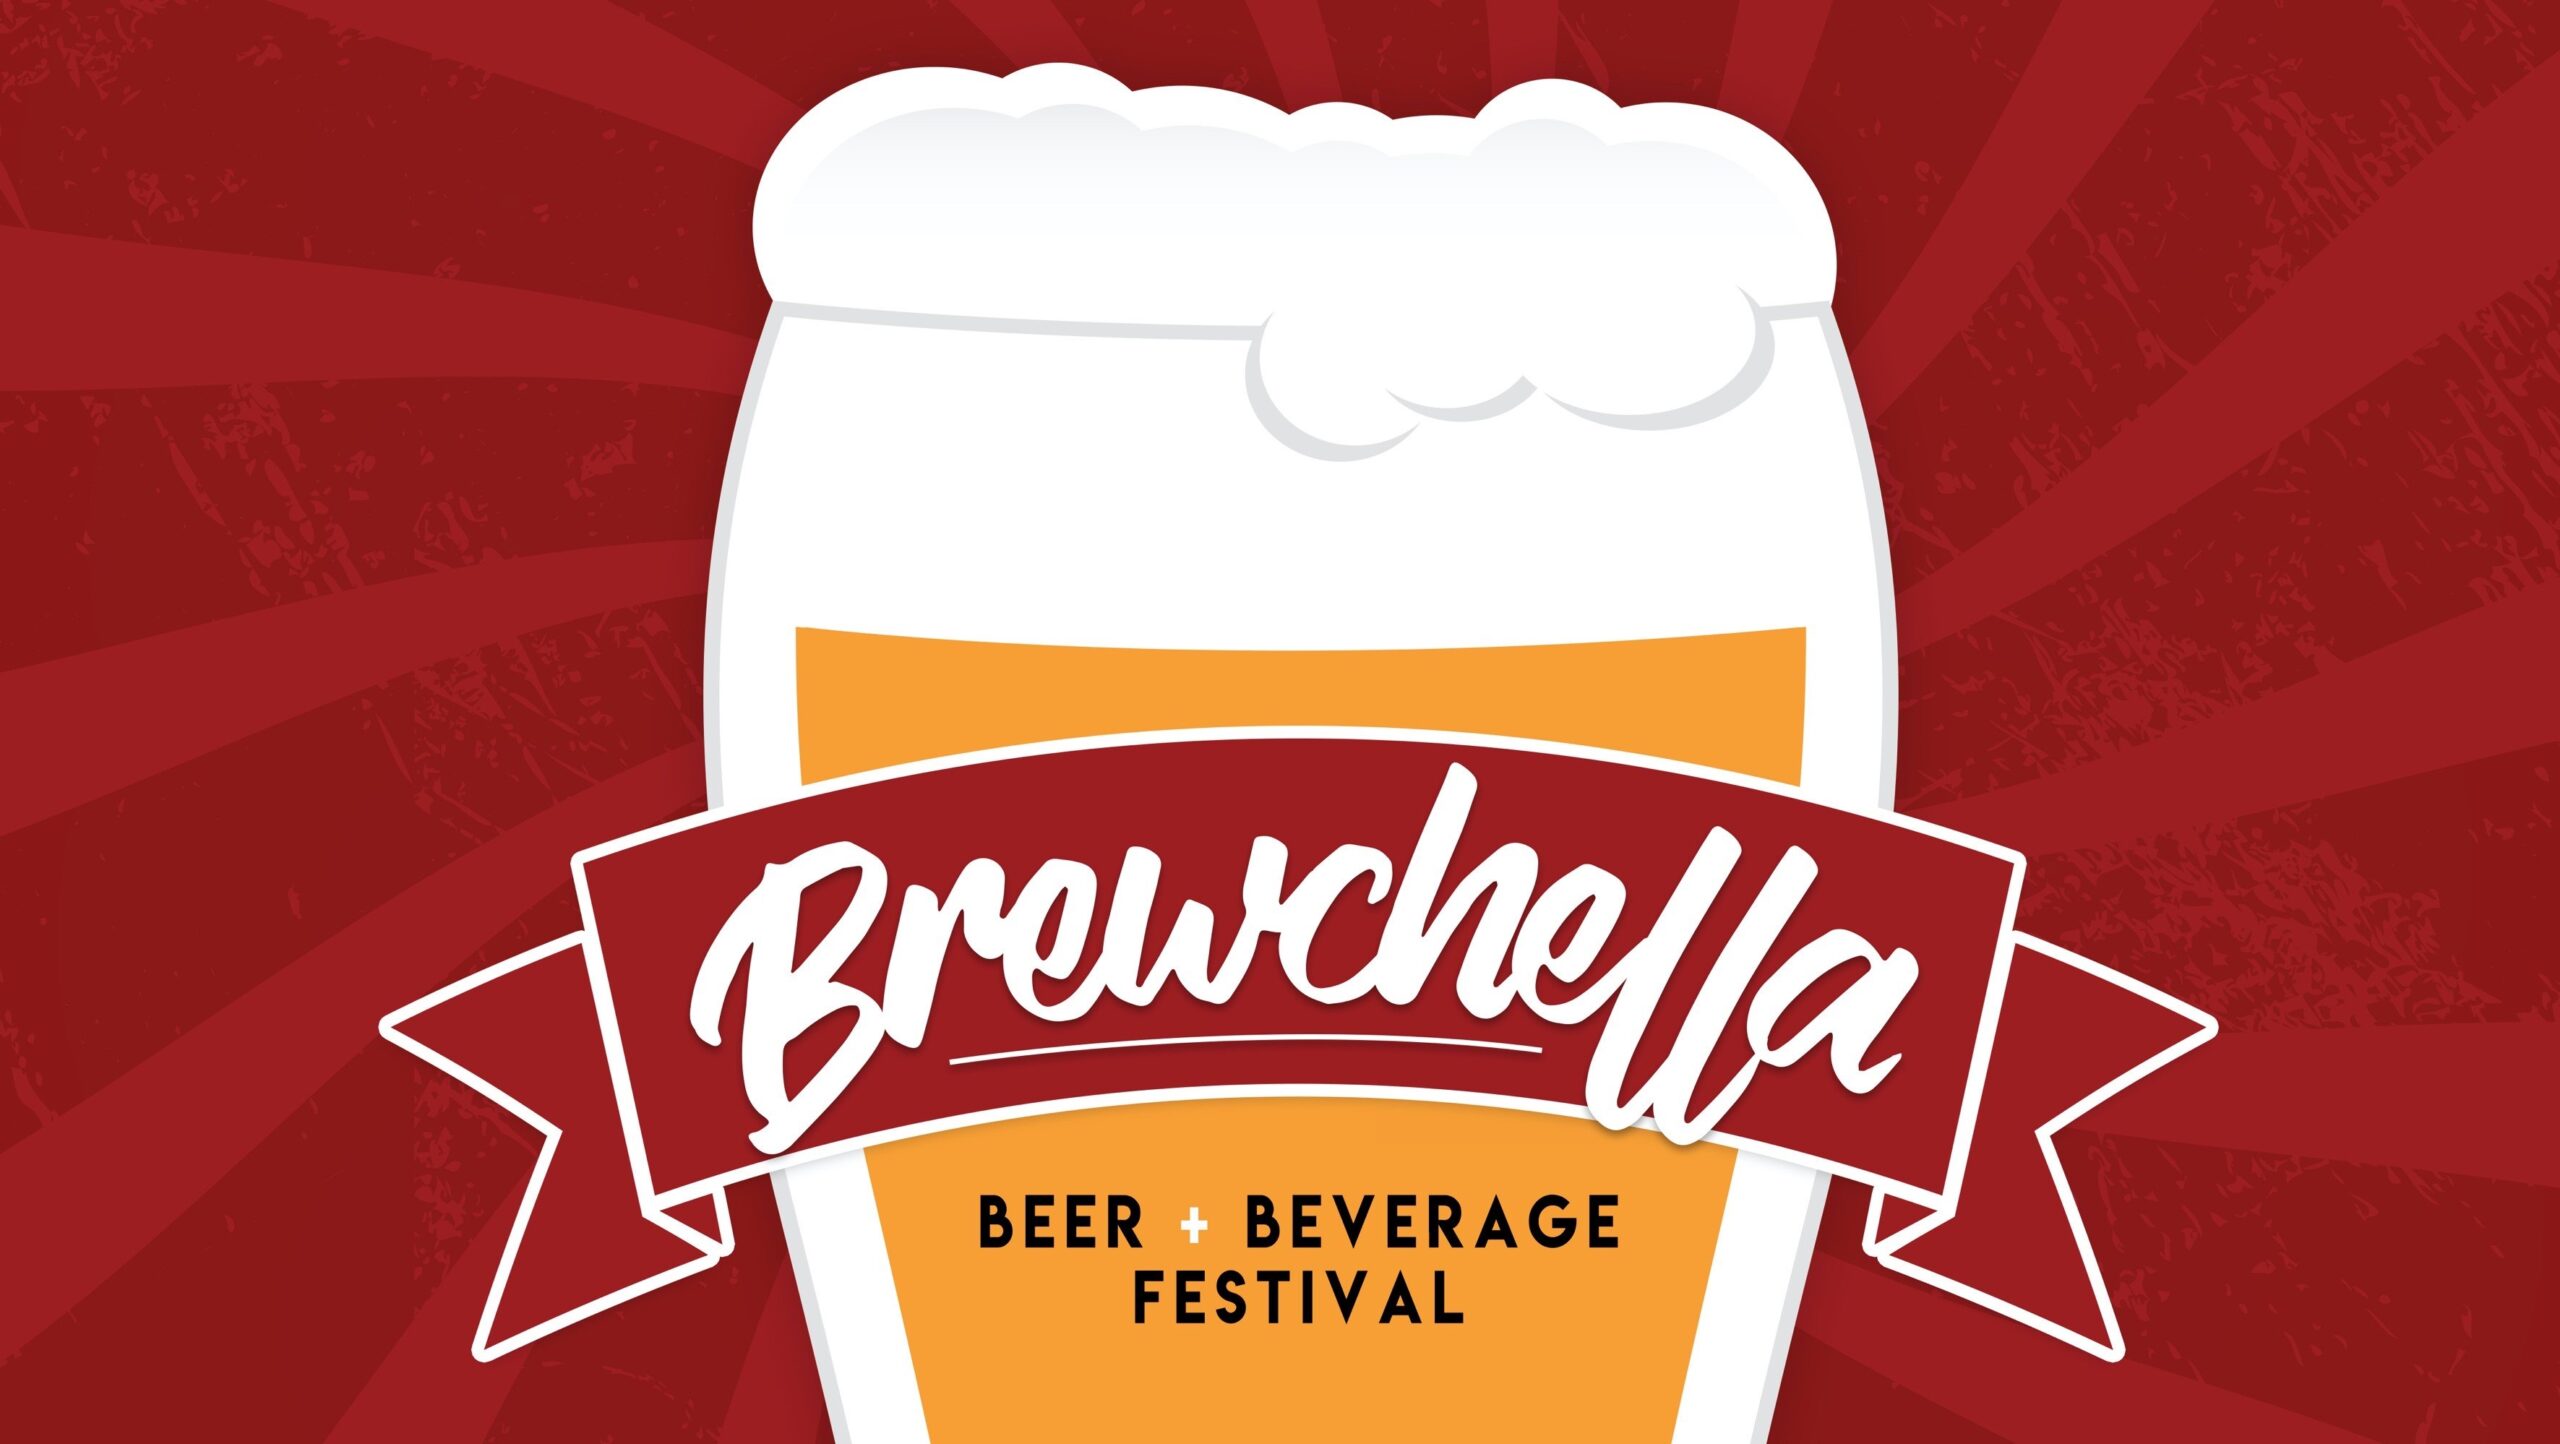 Brewchella Beer + Beverage Festival